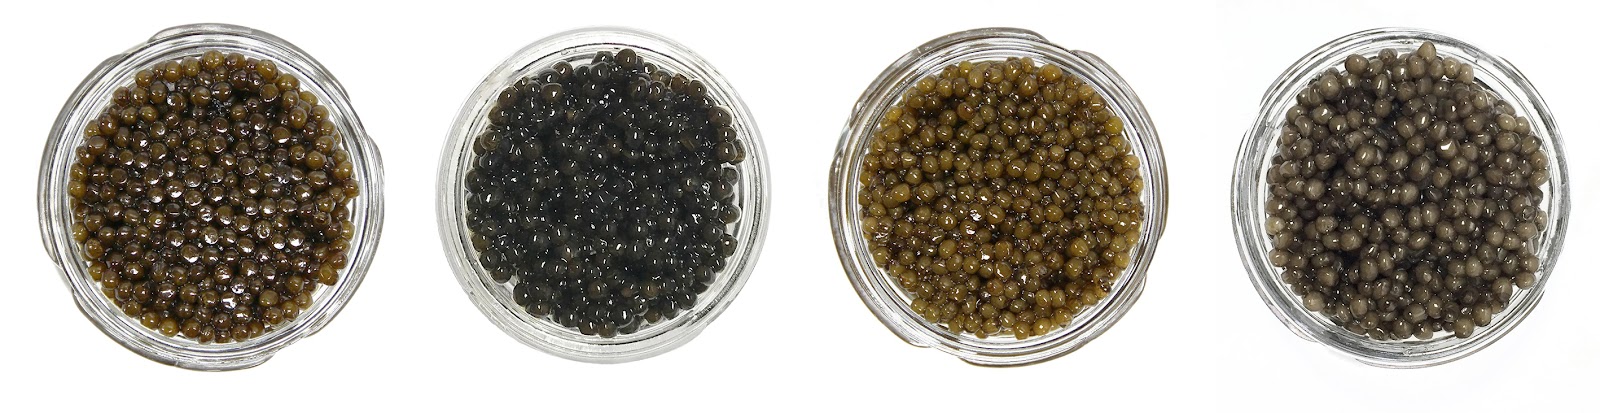 What Color Is Reebok Caviar? - Shoe Effect